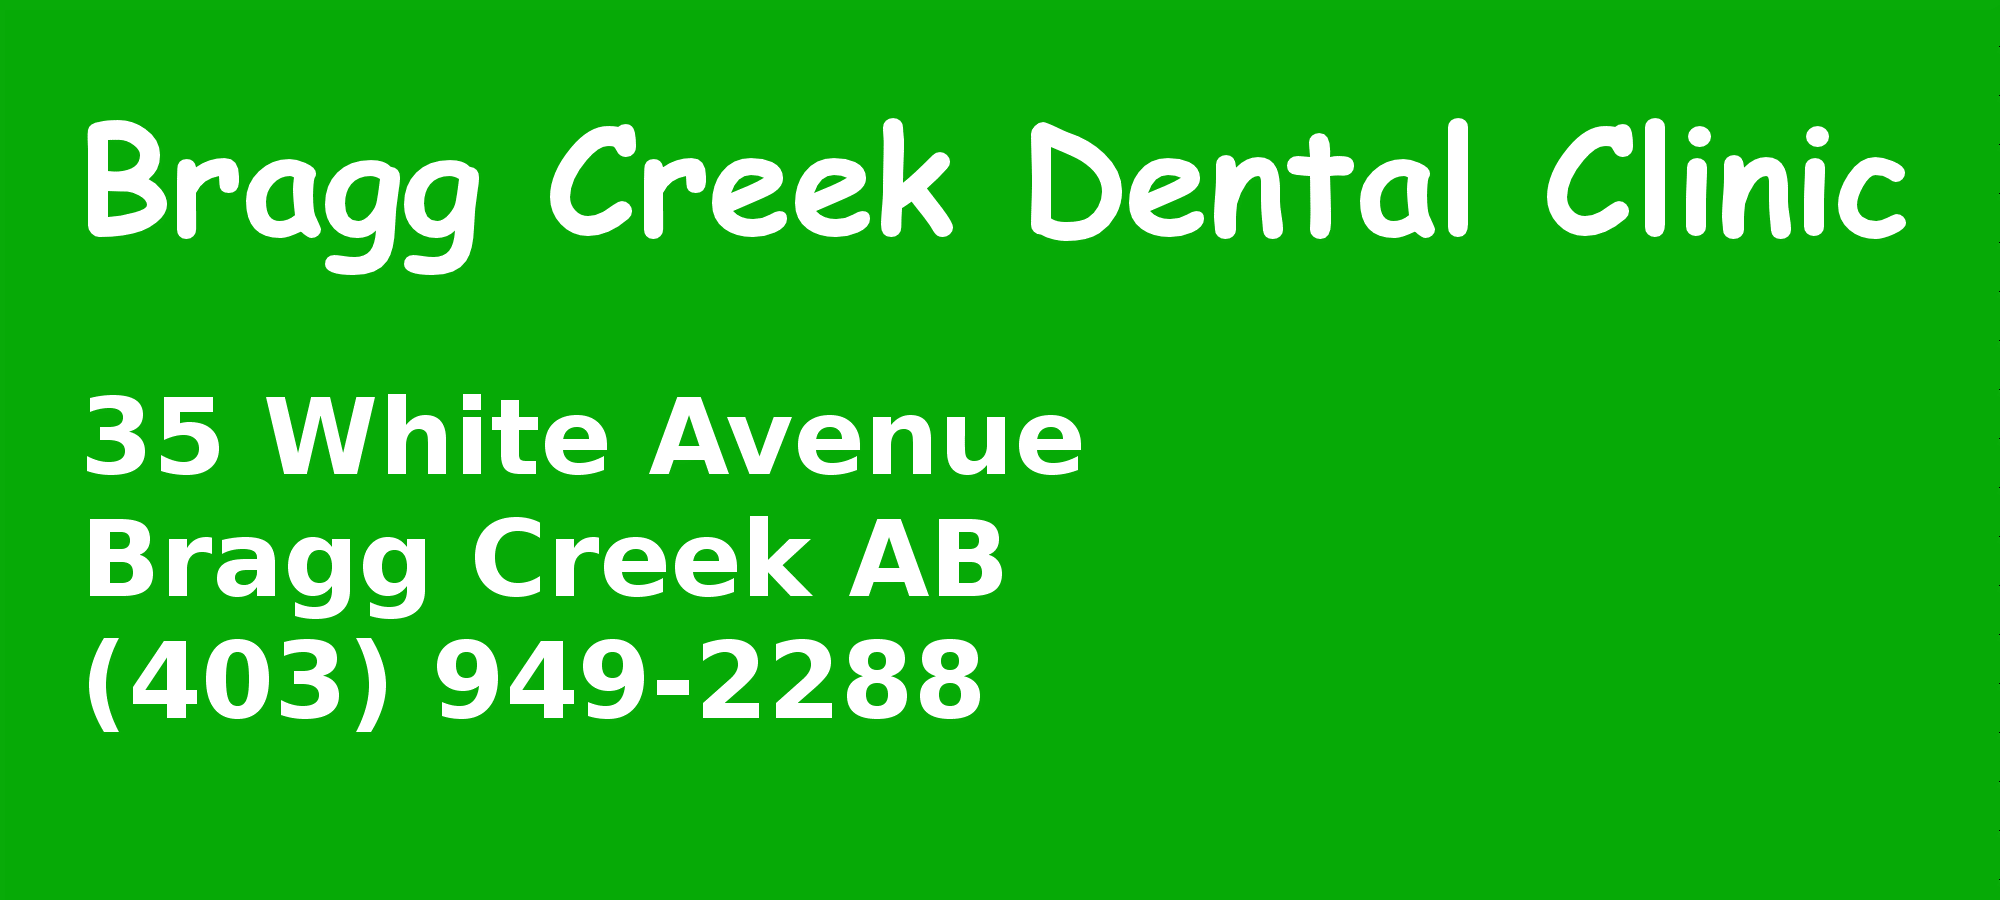 Bragg Creek Dental